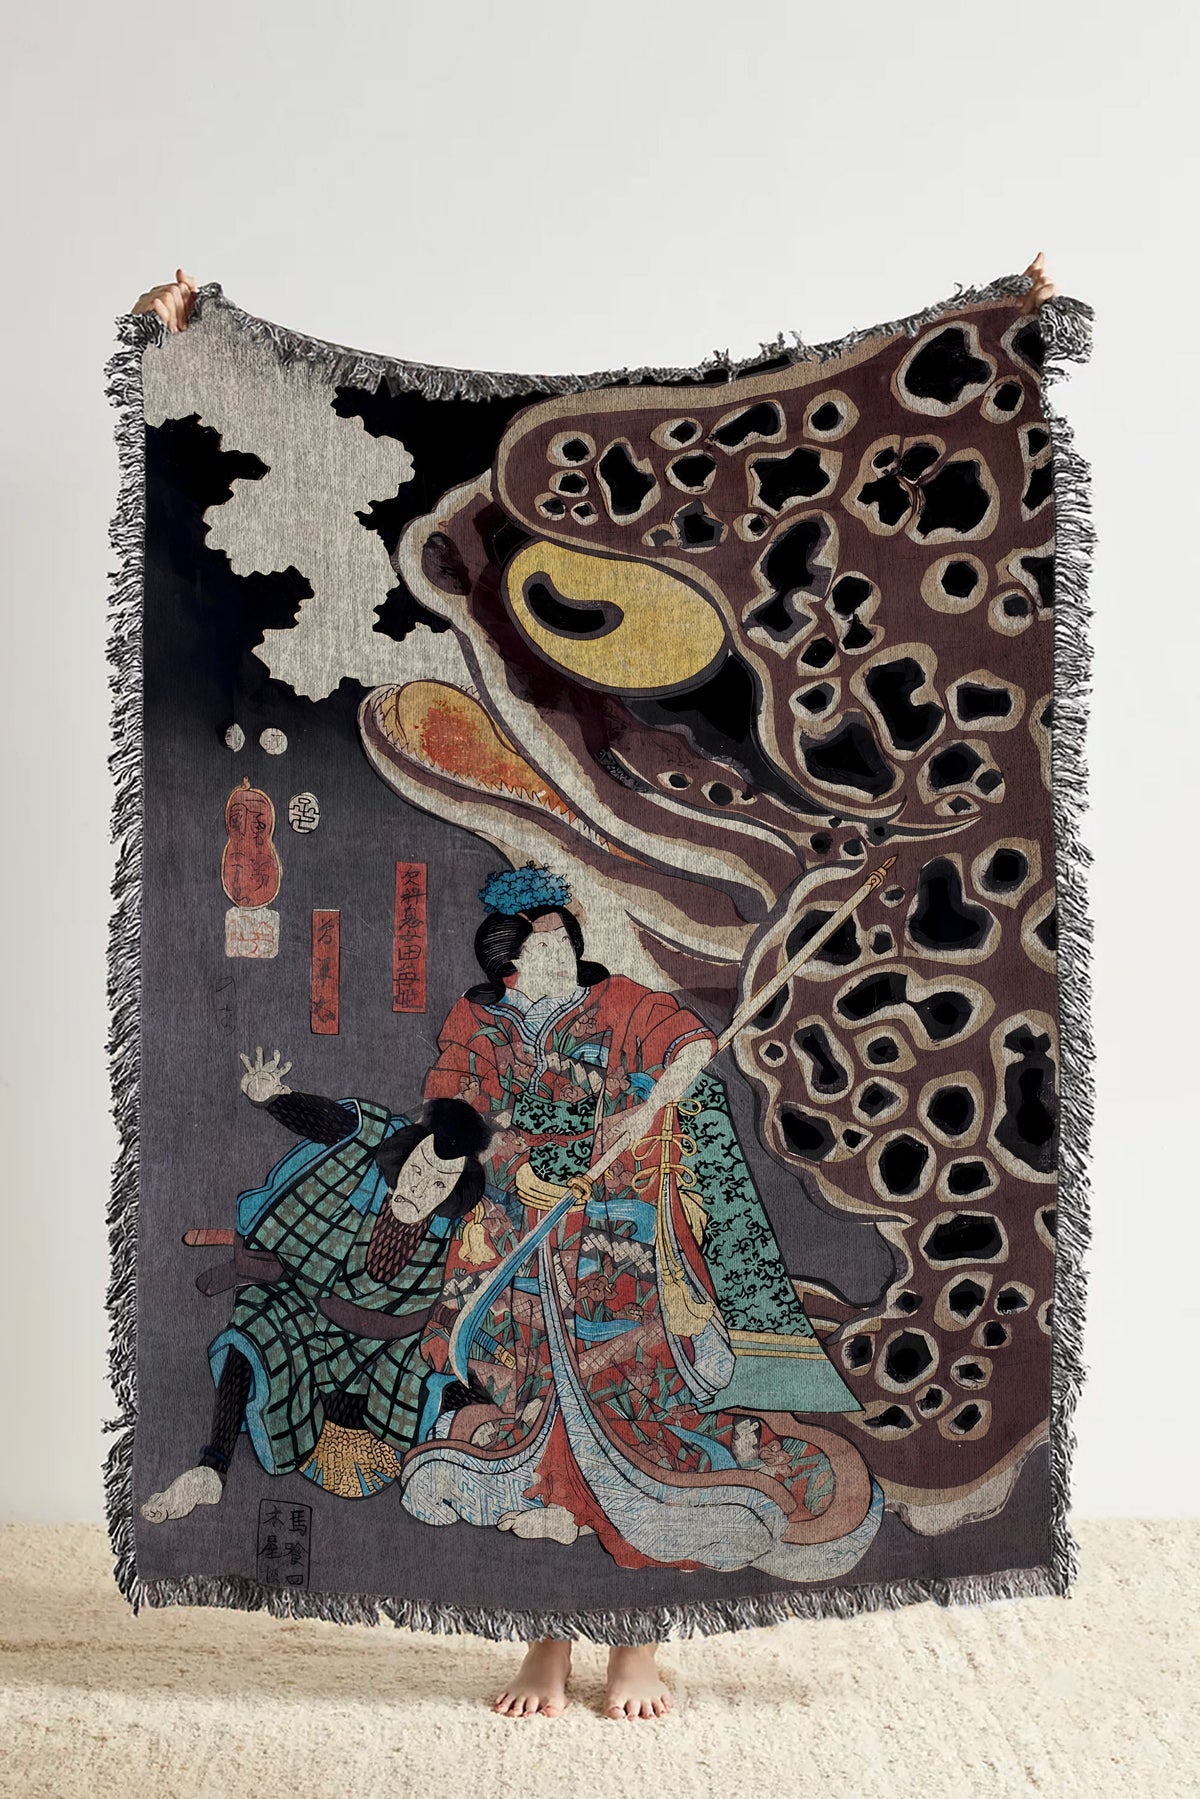 Jiraya Fighting Orochimaru Throw Blanket